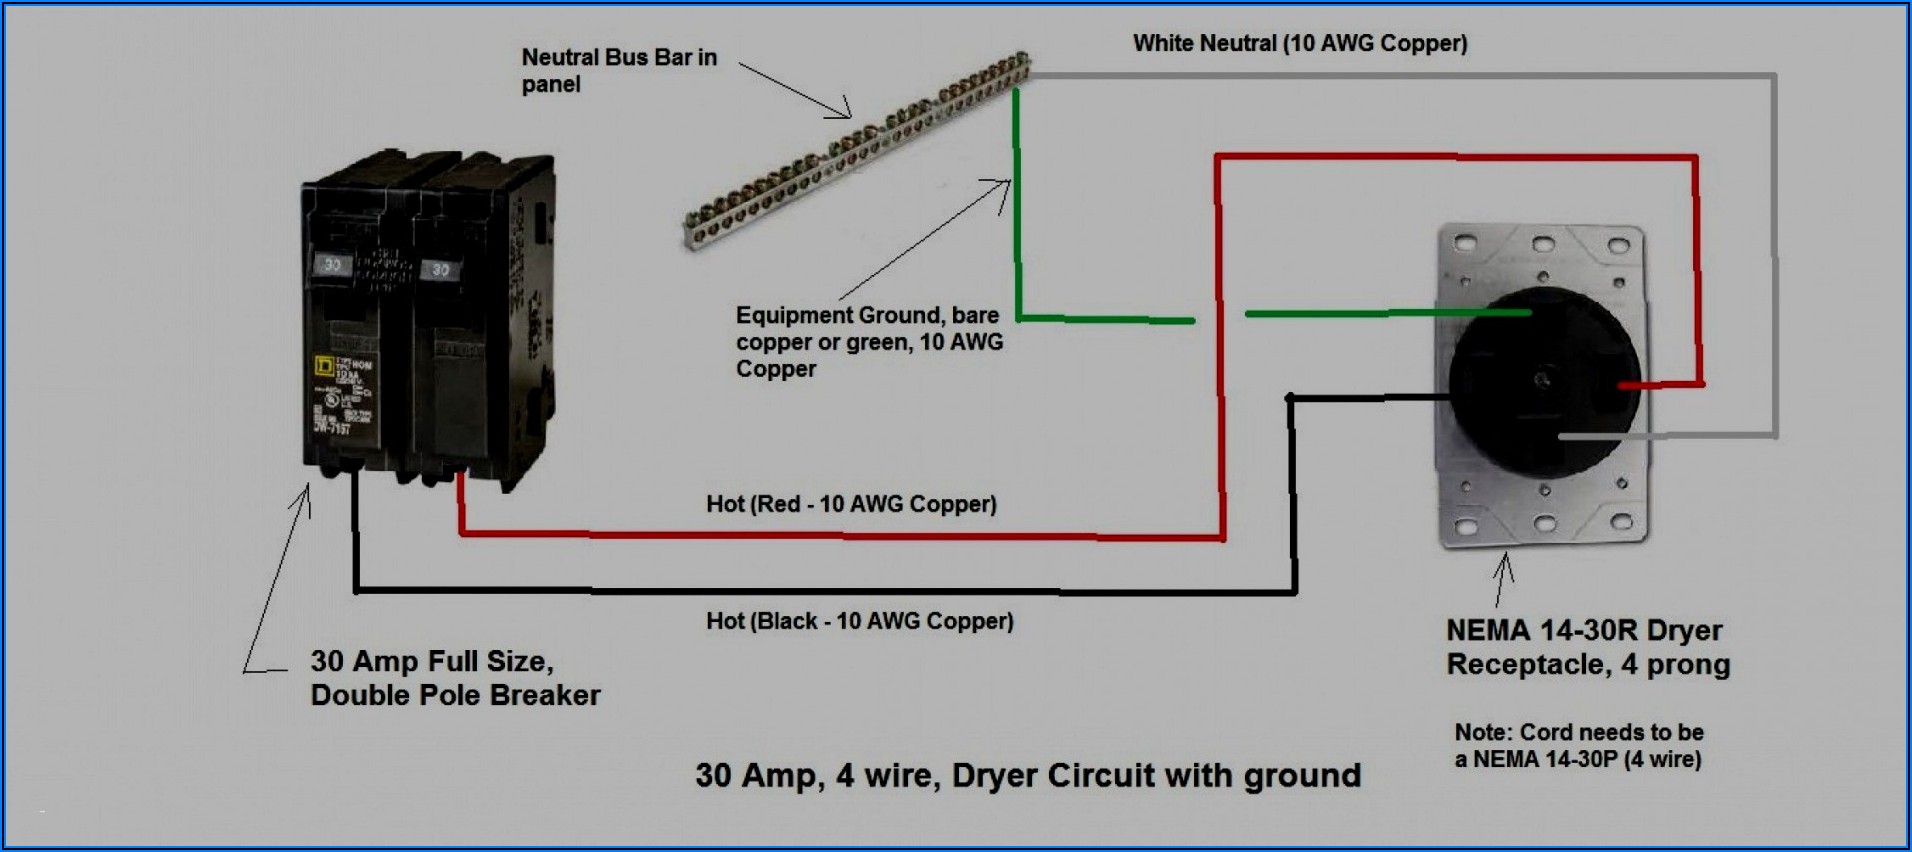 50 Amp Twist Lock Plug Wiring Diagram